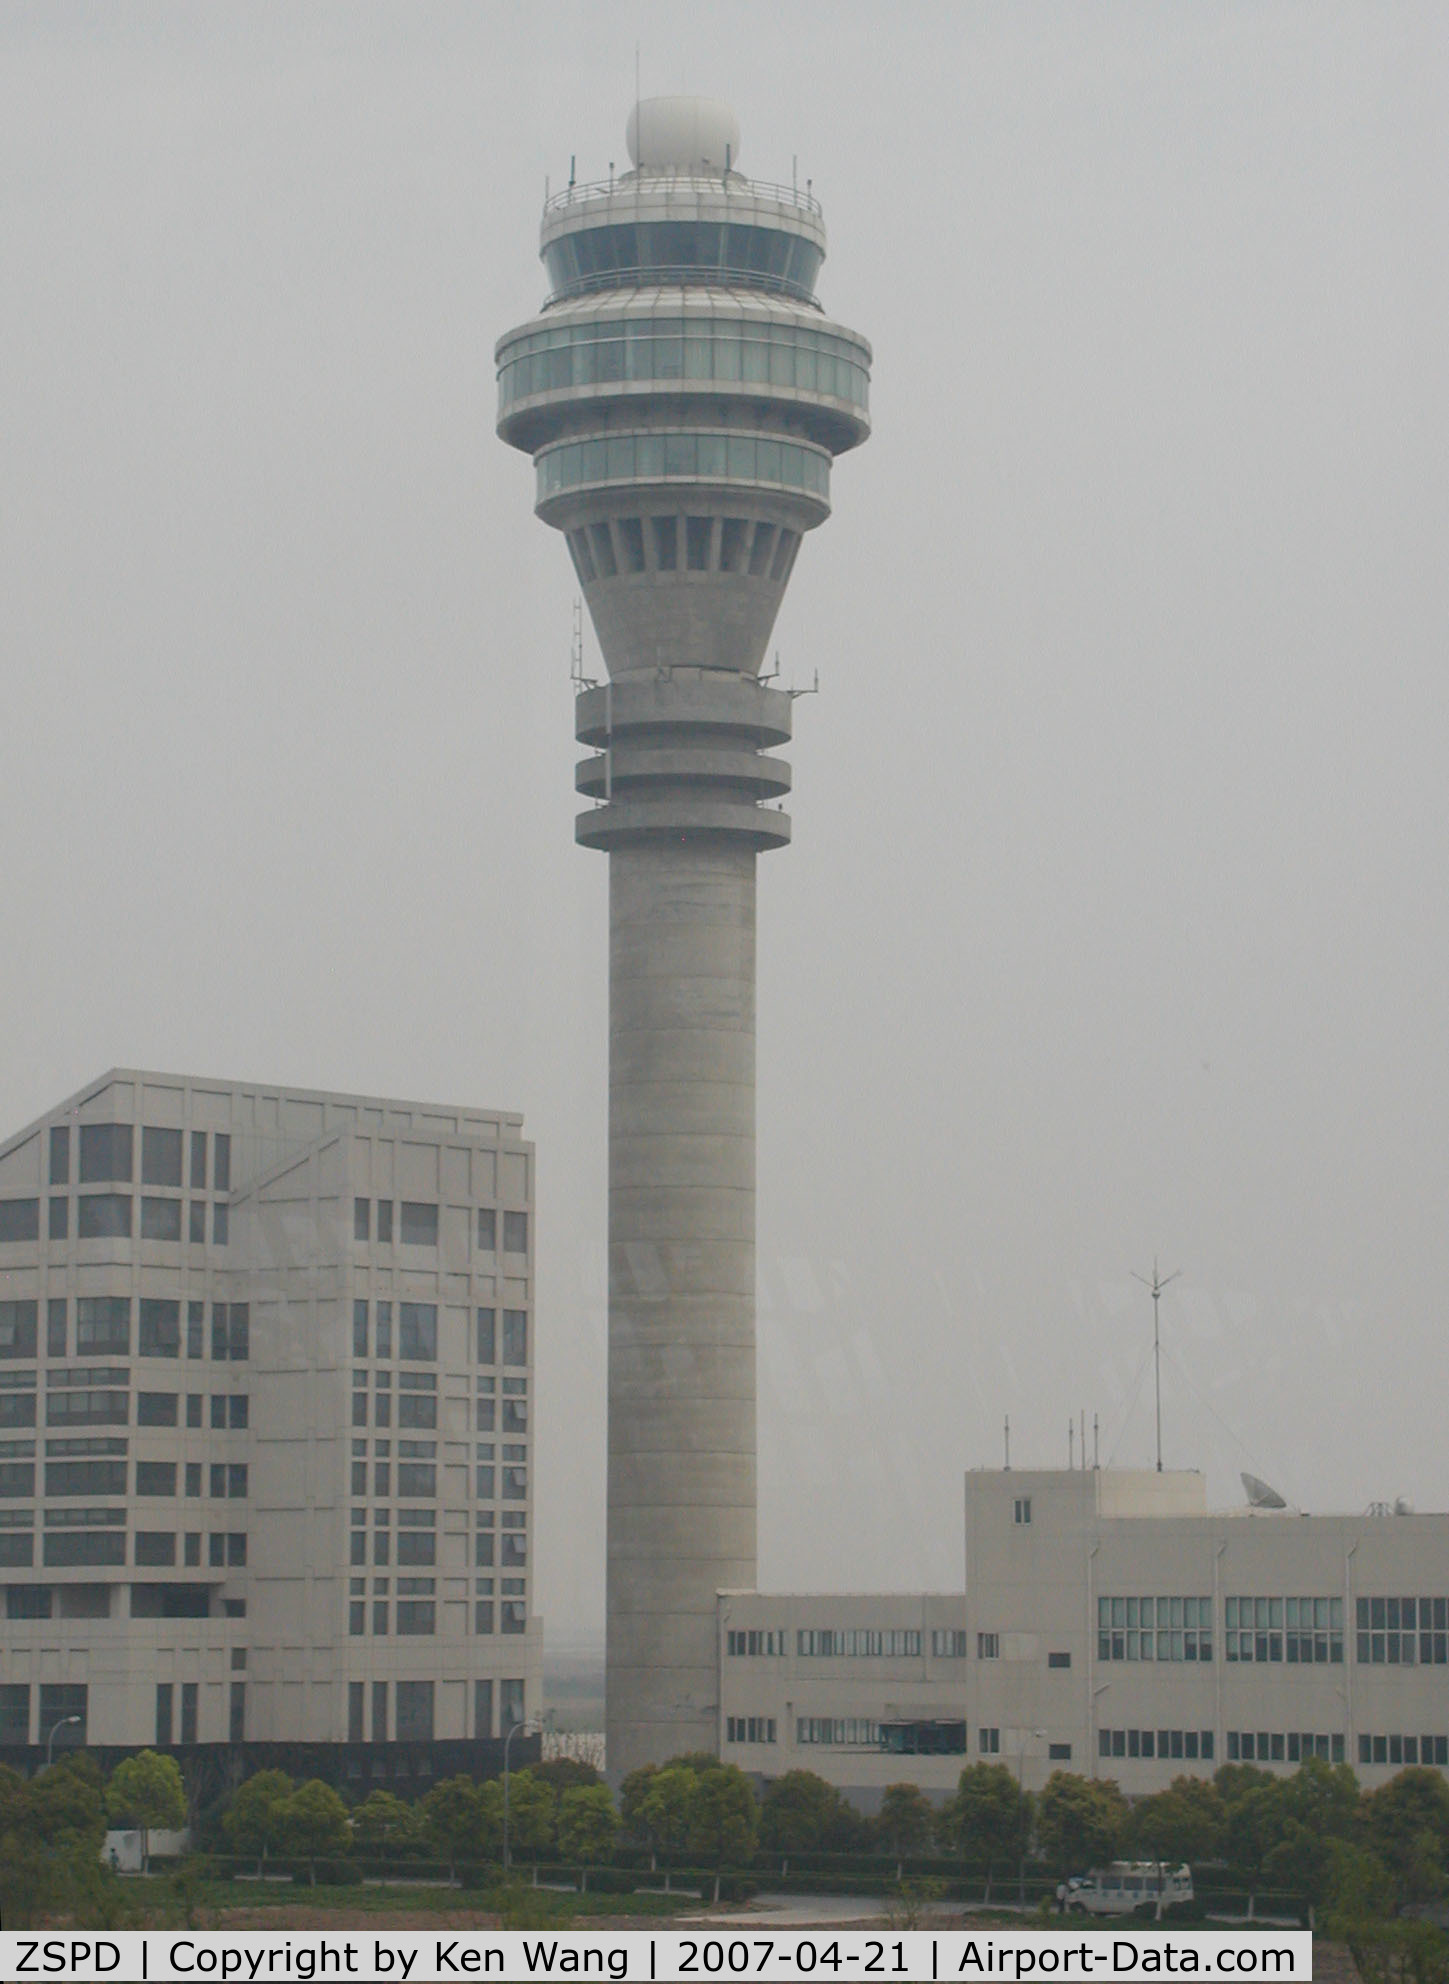 Shanghai Pudong International Airport, Shanghai China (ZSPD) - Control Tower